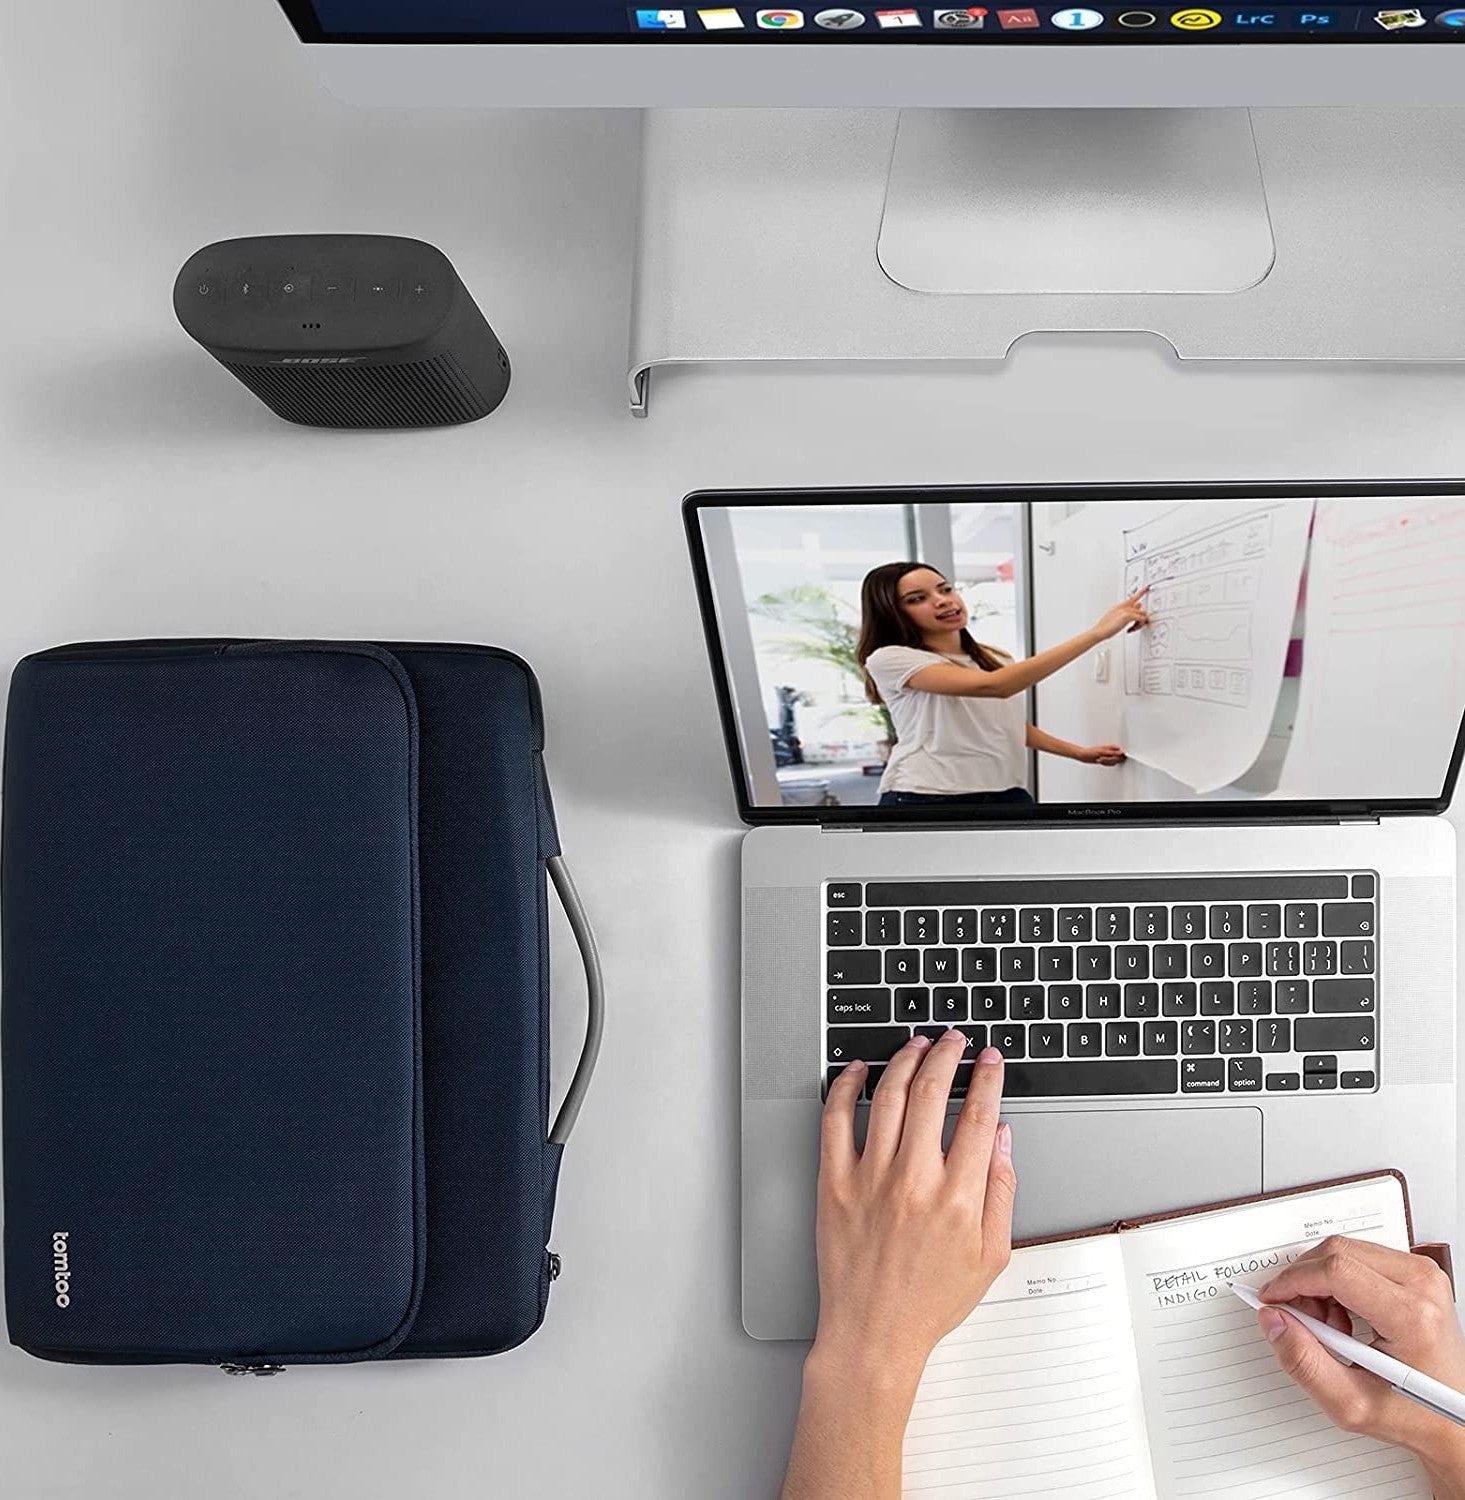 Tomtoc Versatile A14 MacBook Pro 13-Inch Shockproof Bag - Dark Blue